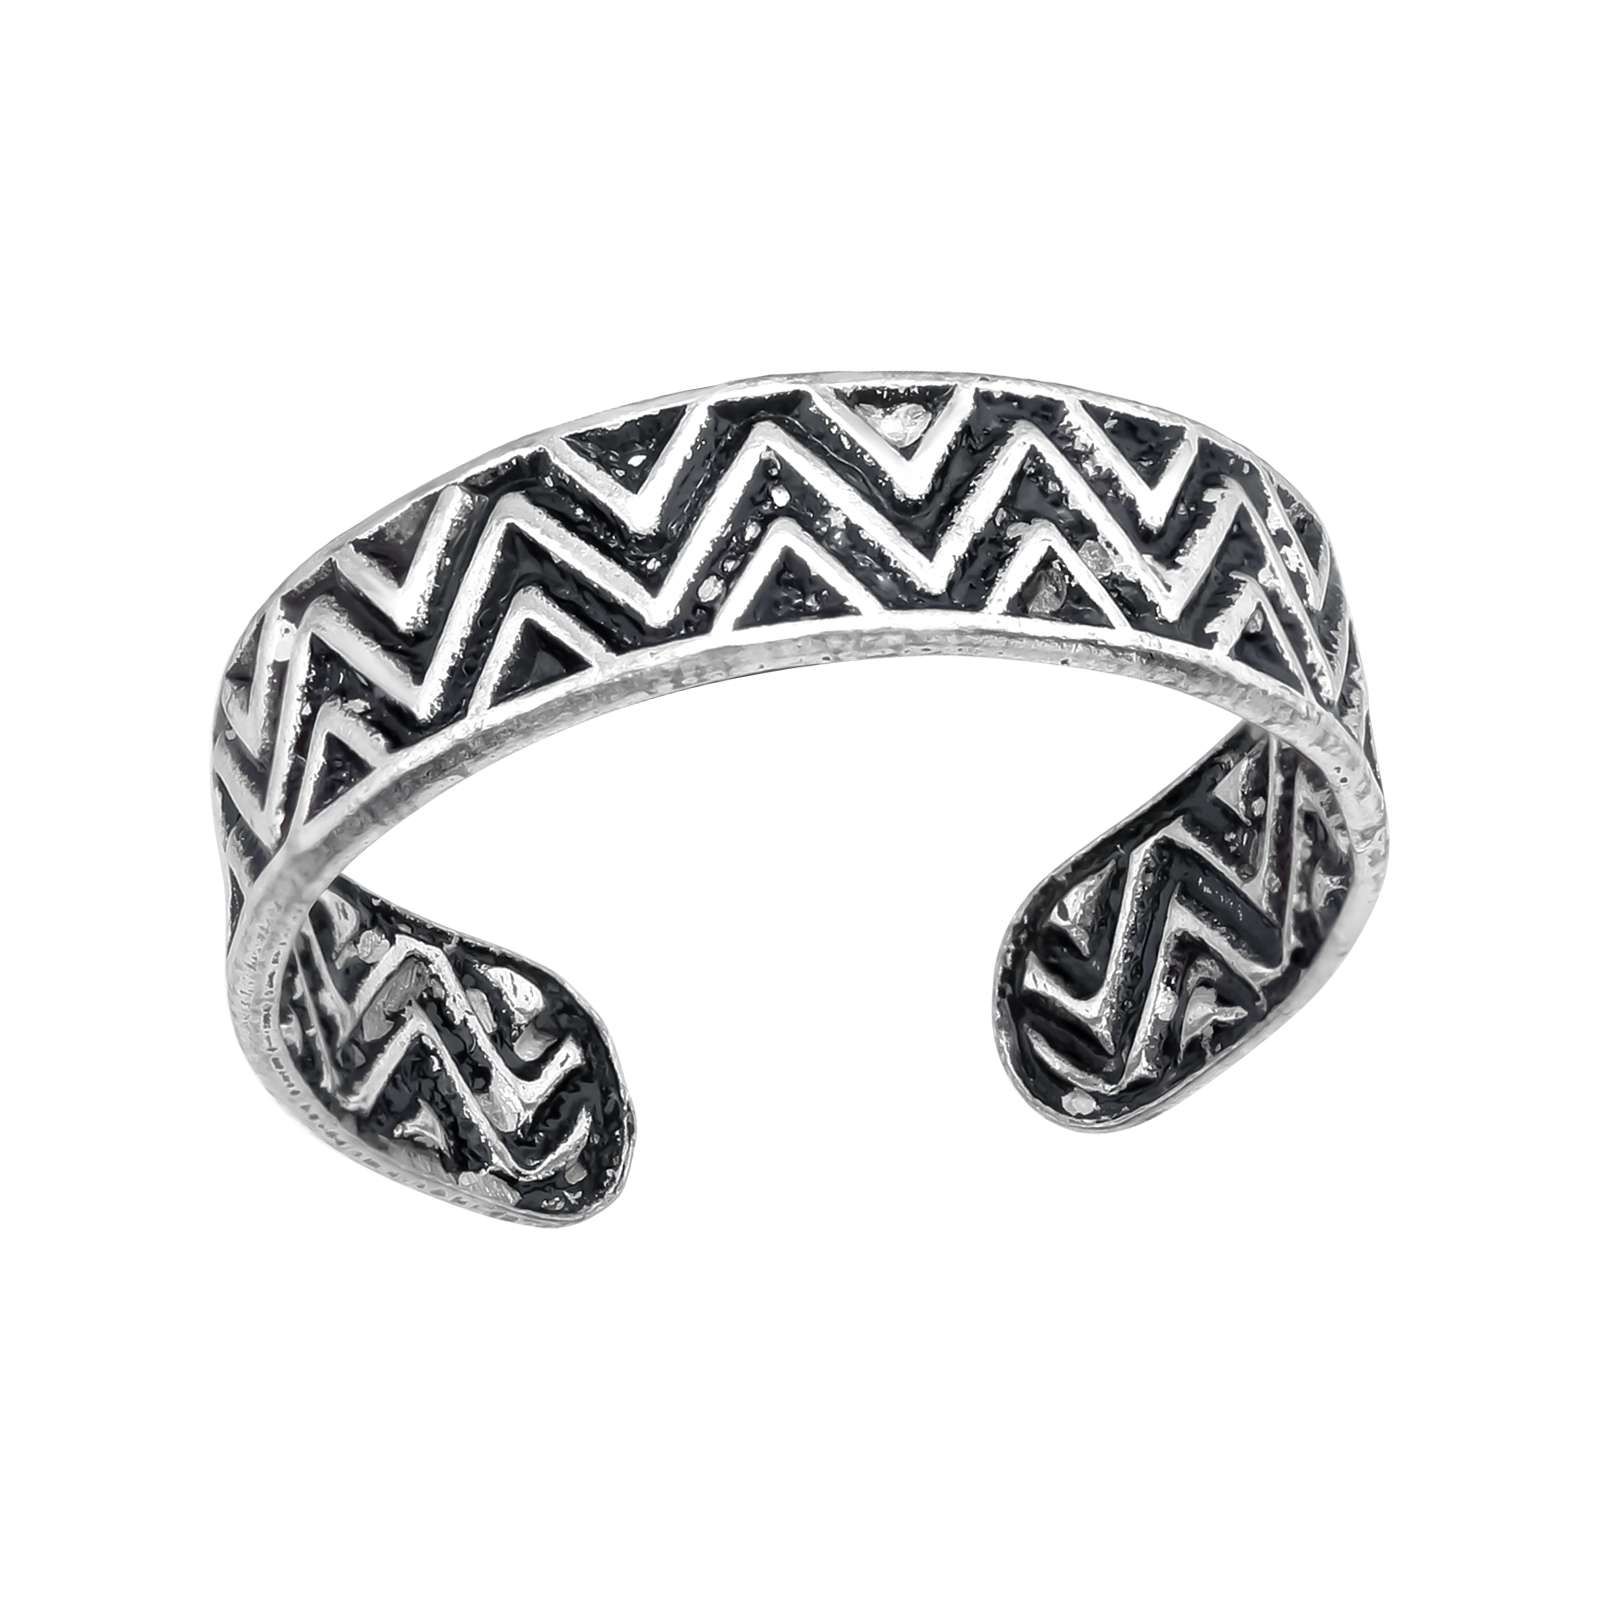 Zilveren teenring zigzag oxi  One size fits all - Toe Ring Adjustable  Zilverana  Sterling 925 Silver (Echt zilver)